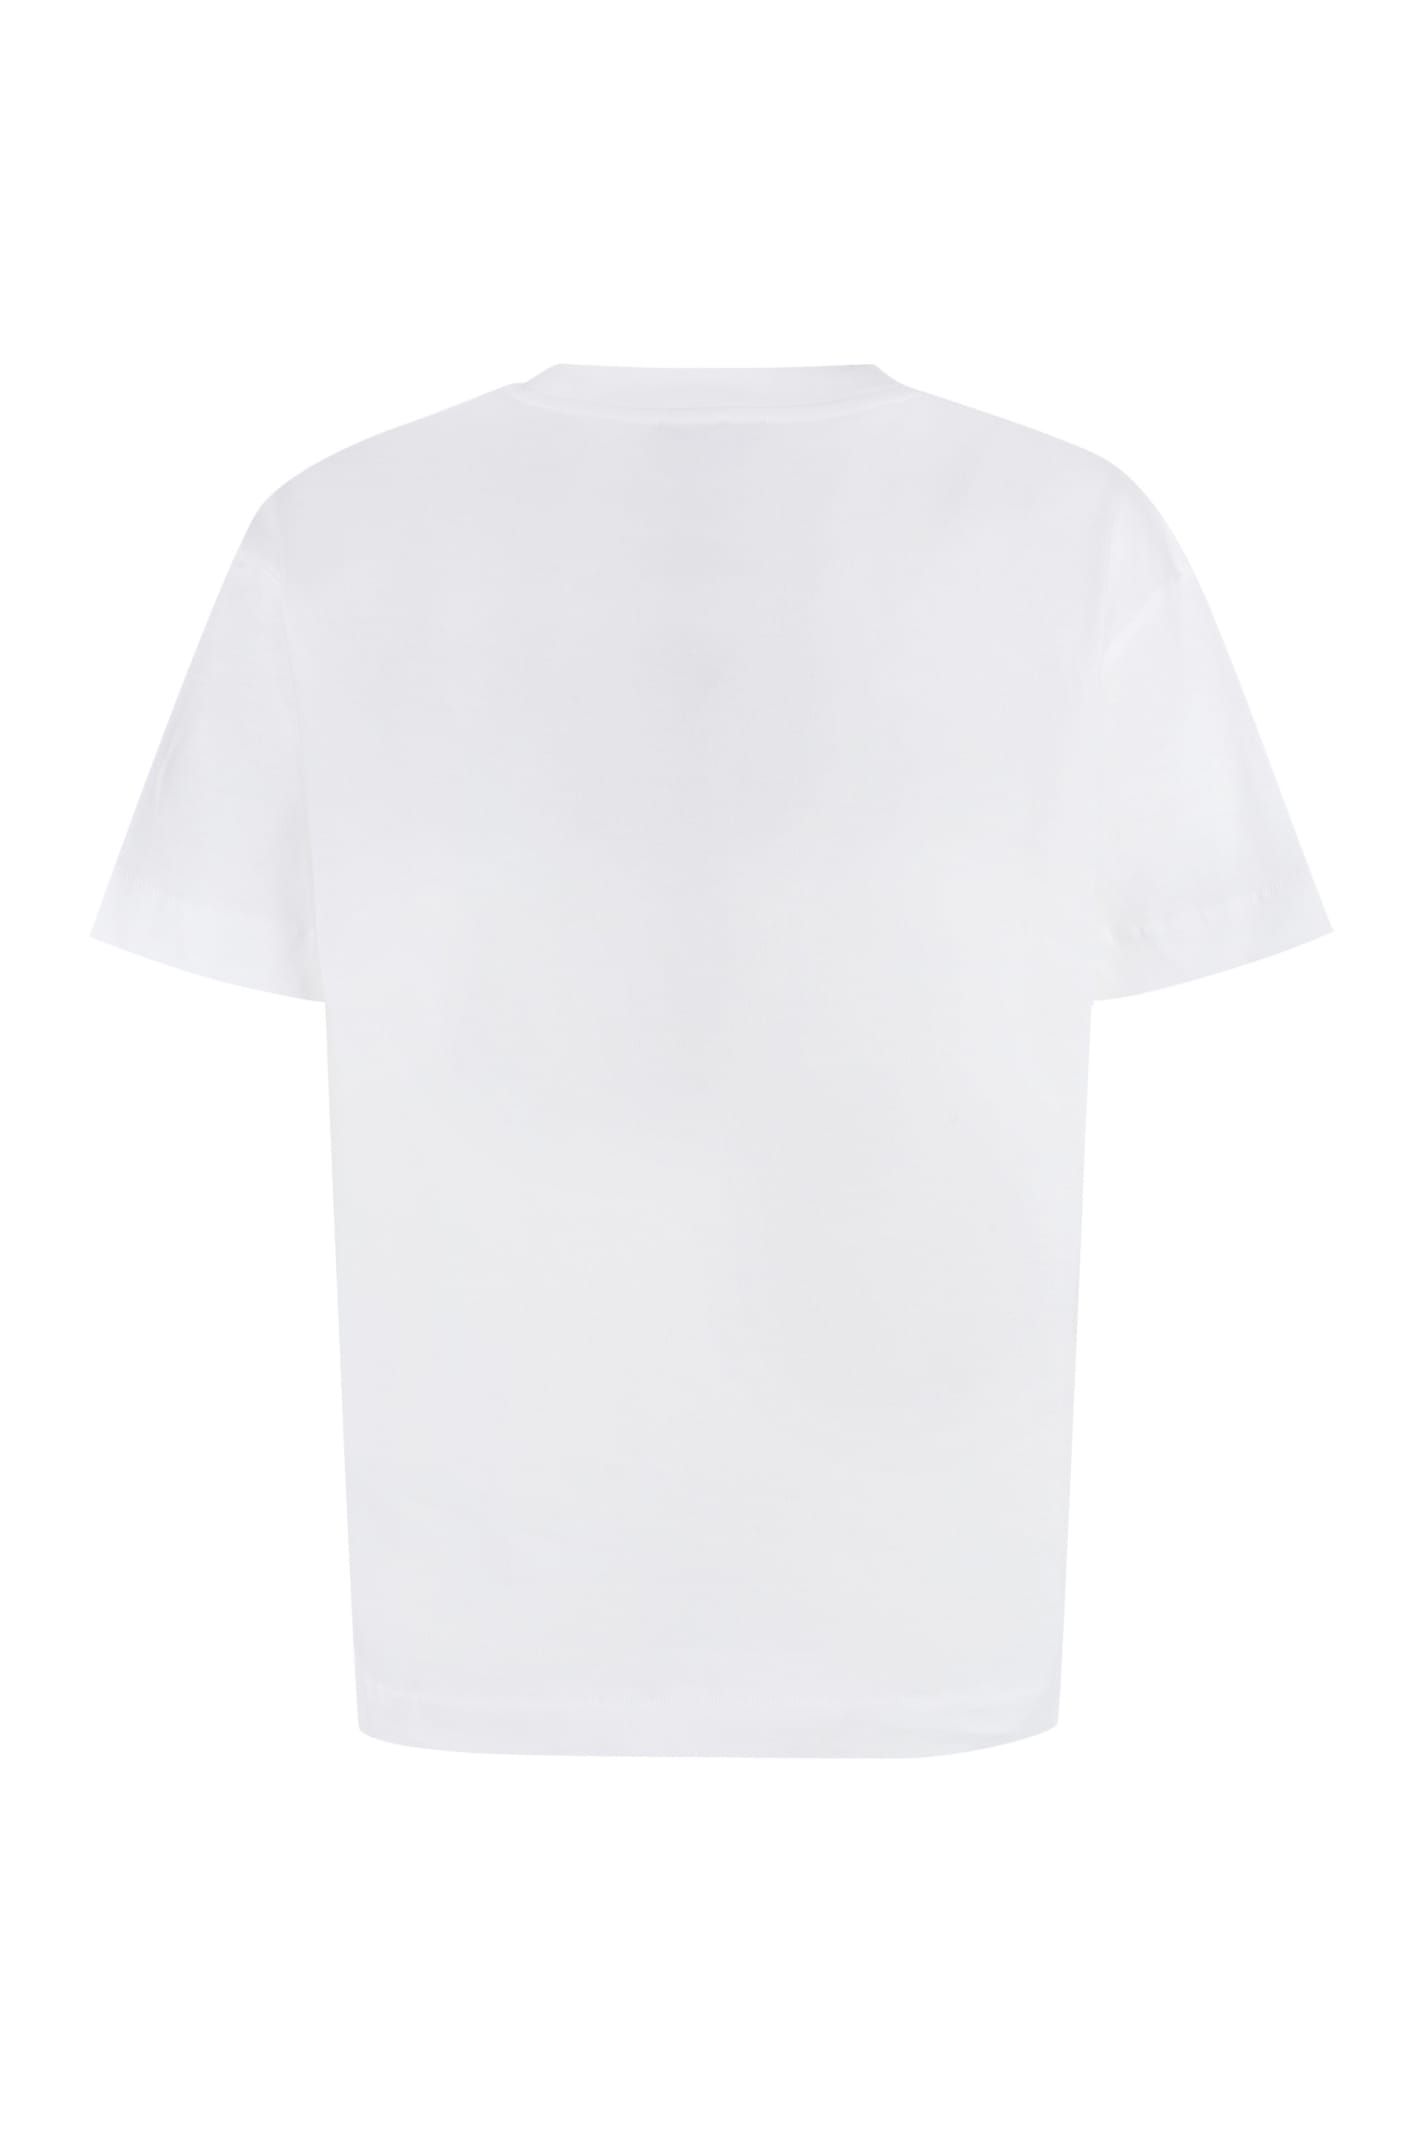 Shop Apc Cotton Crew-neck T-shirt In Aab White